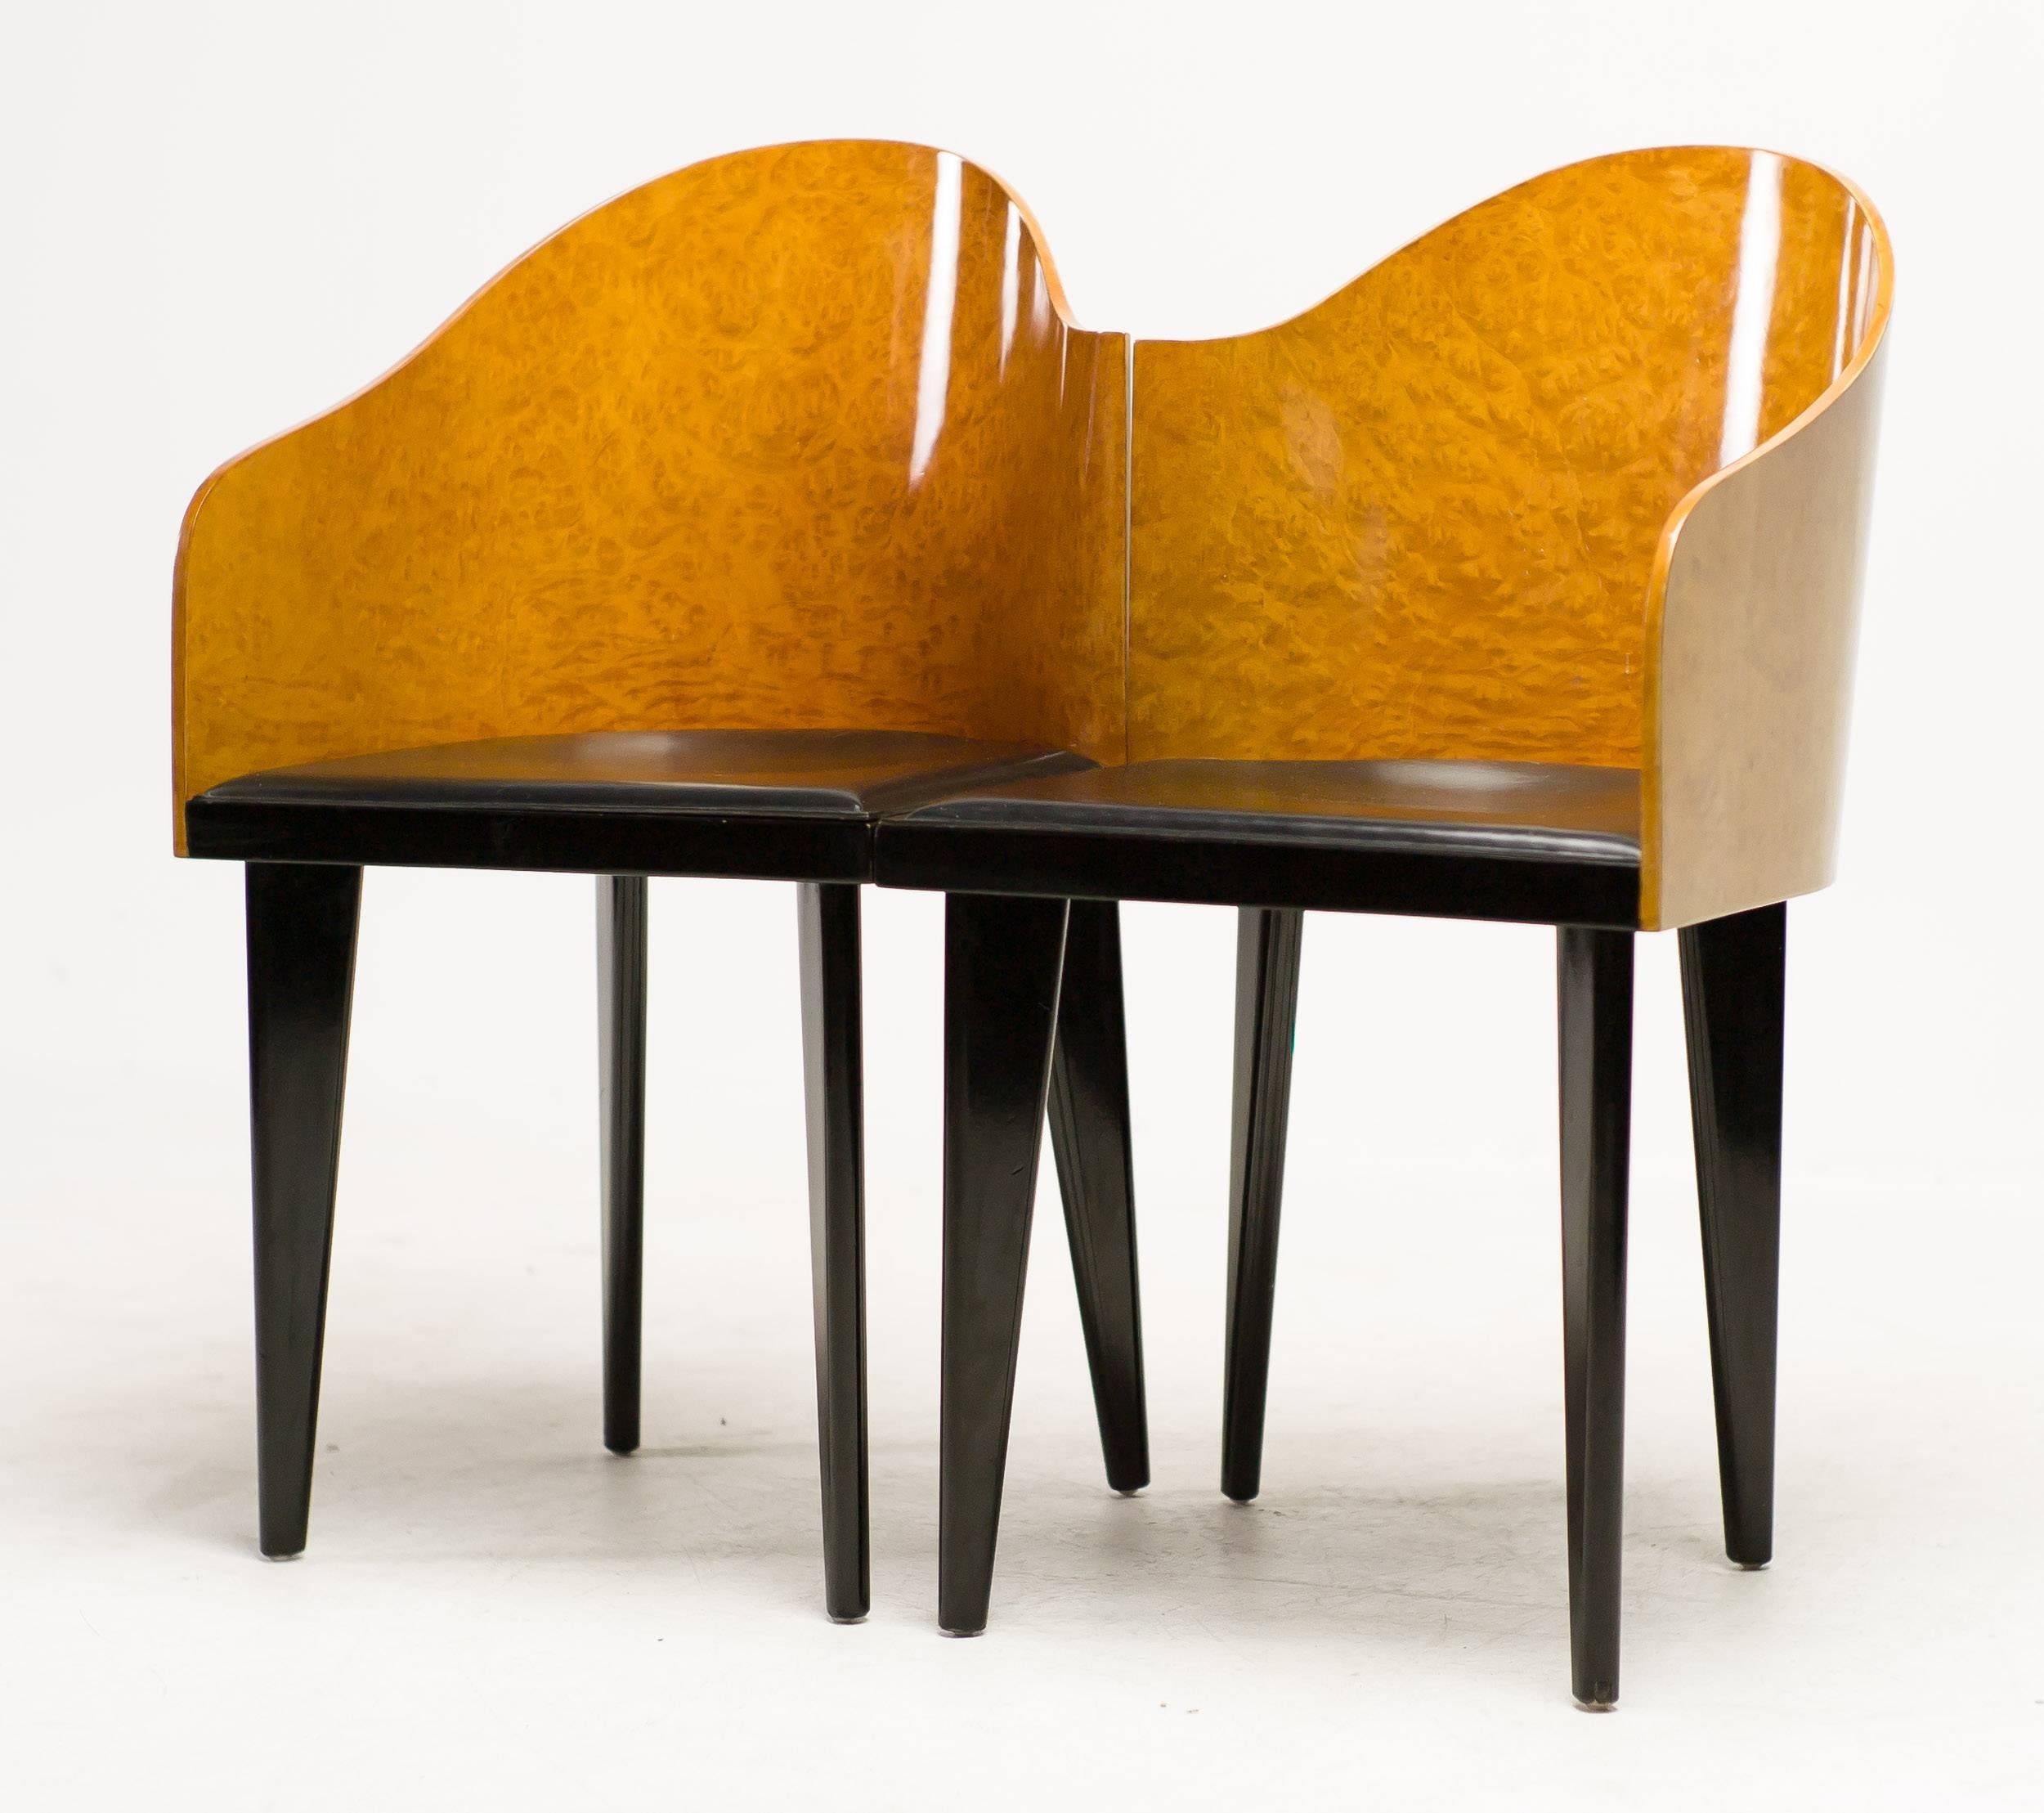 Late 20th Century Toscana Chairs Designed by Piero Sartogo for Saporiti